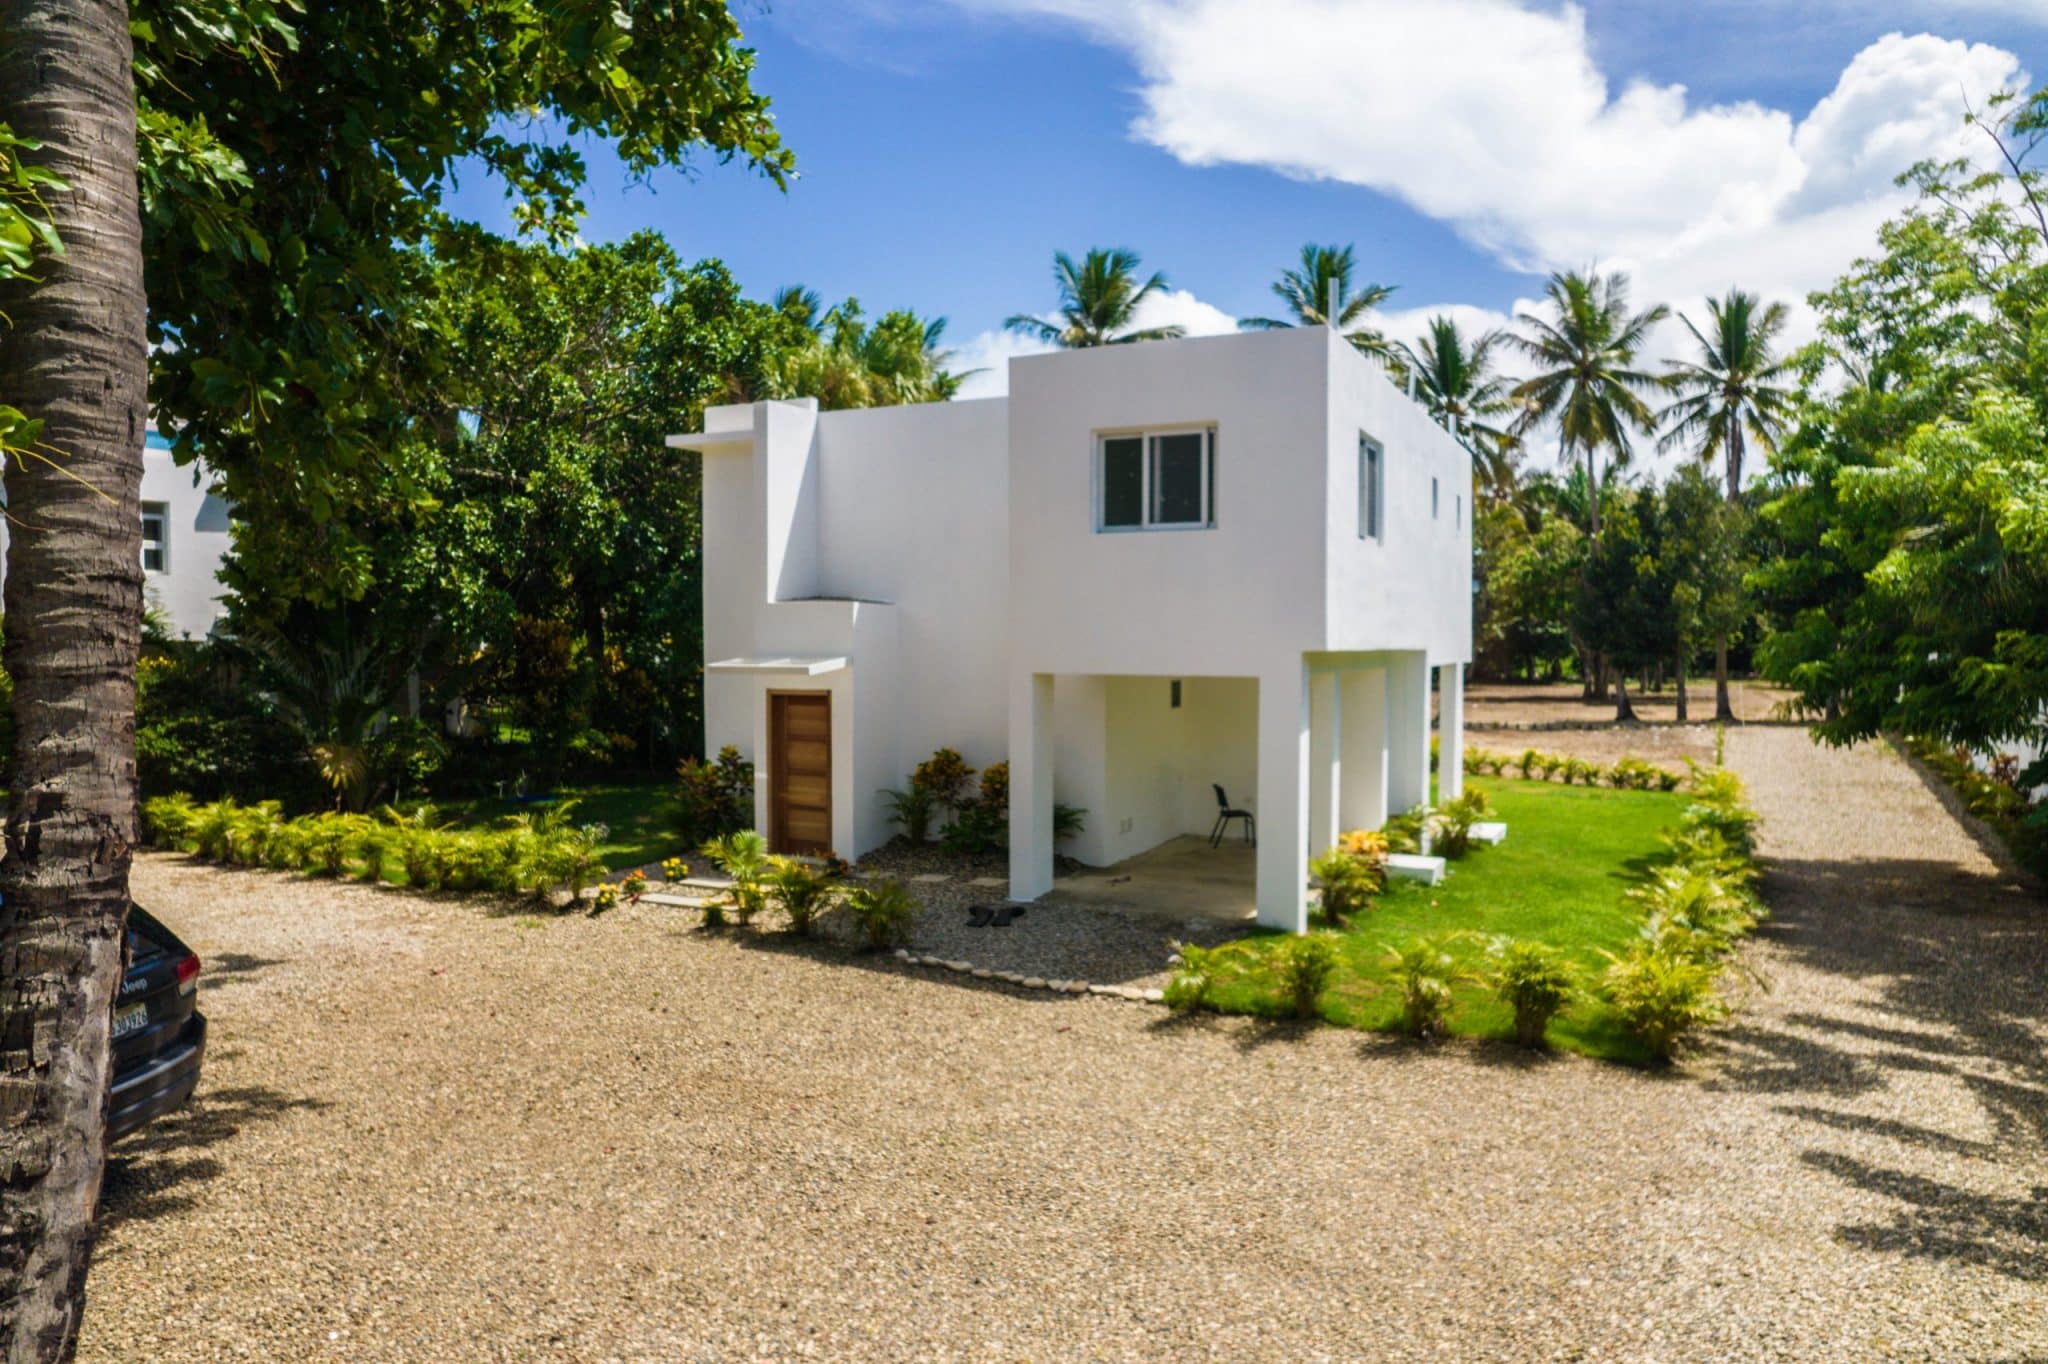 Kite Beach 2 bedroom villa. High rental income potential!